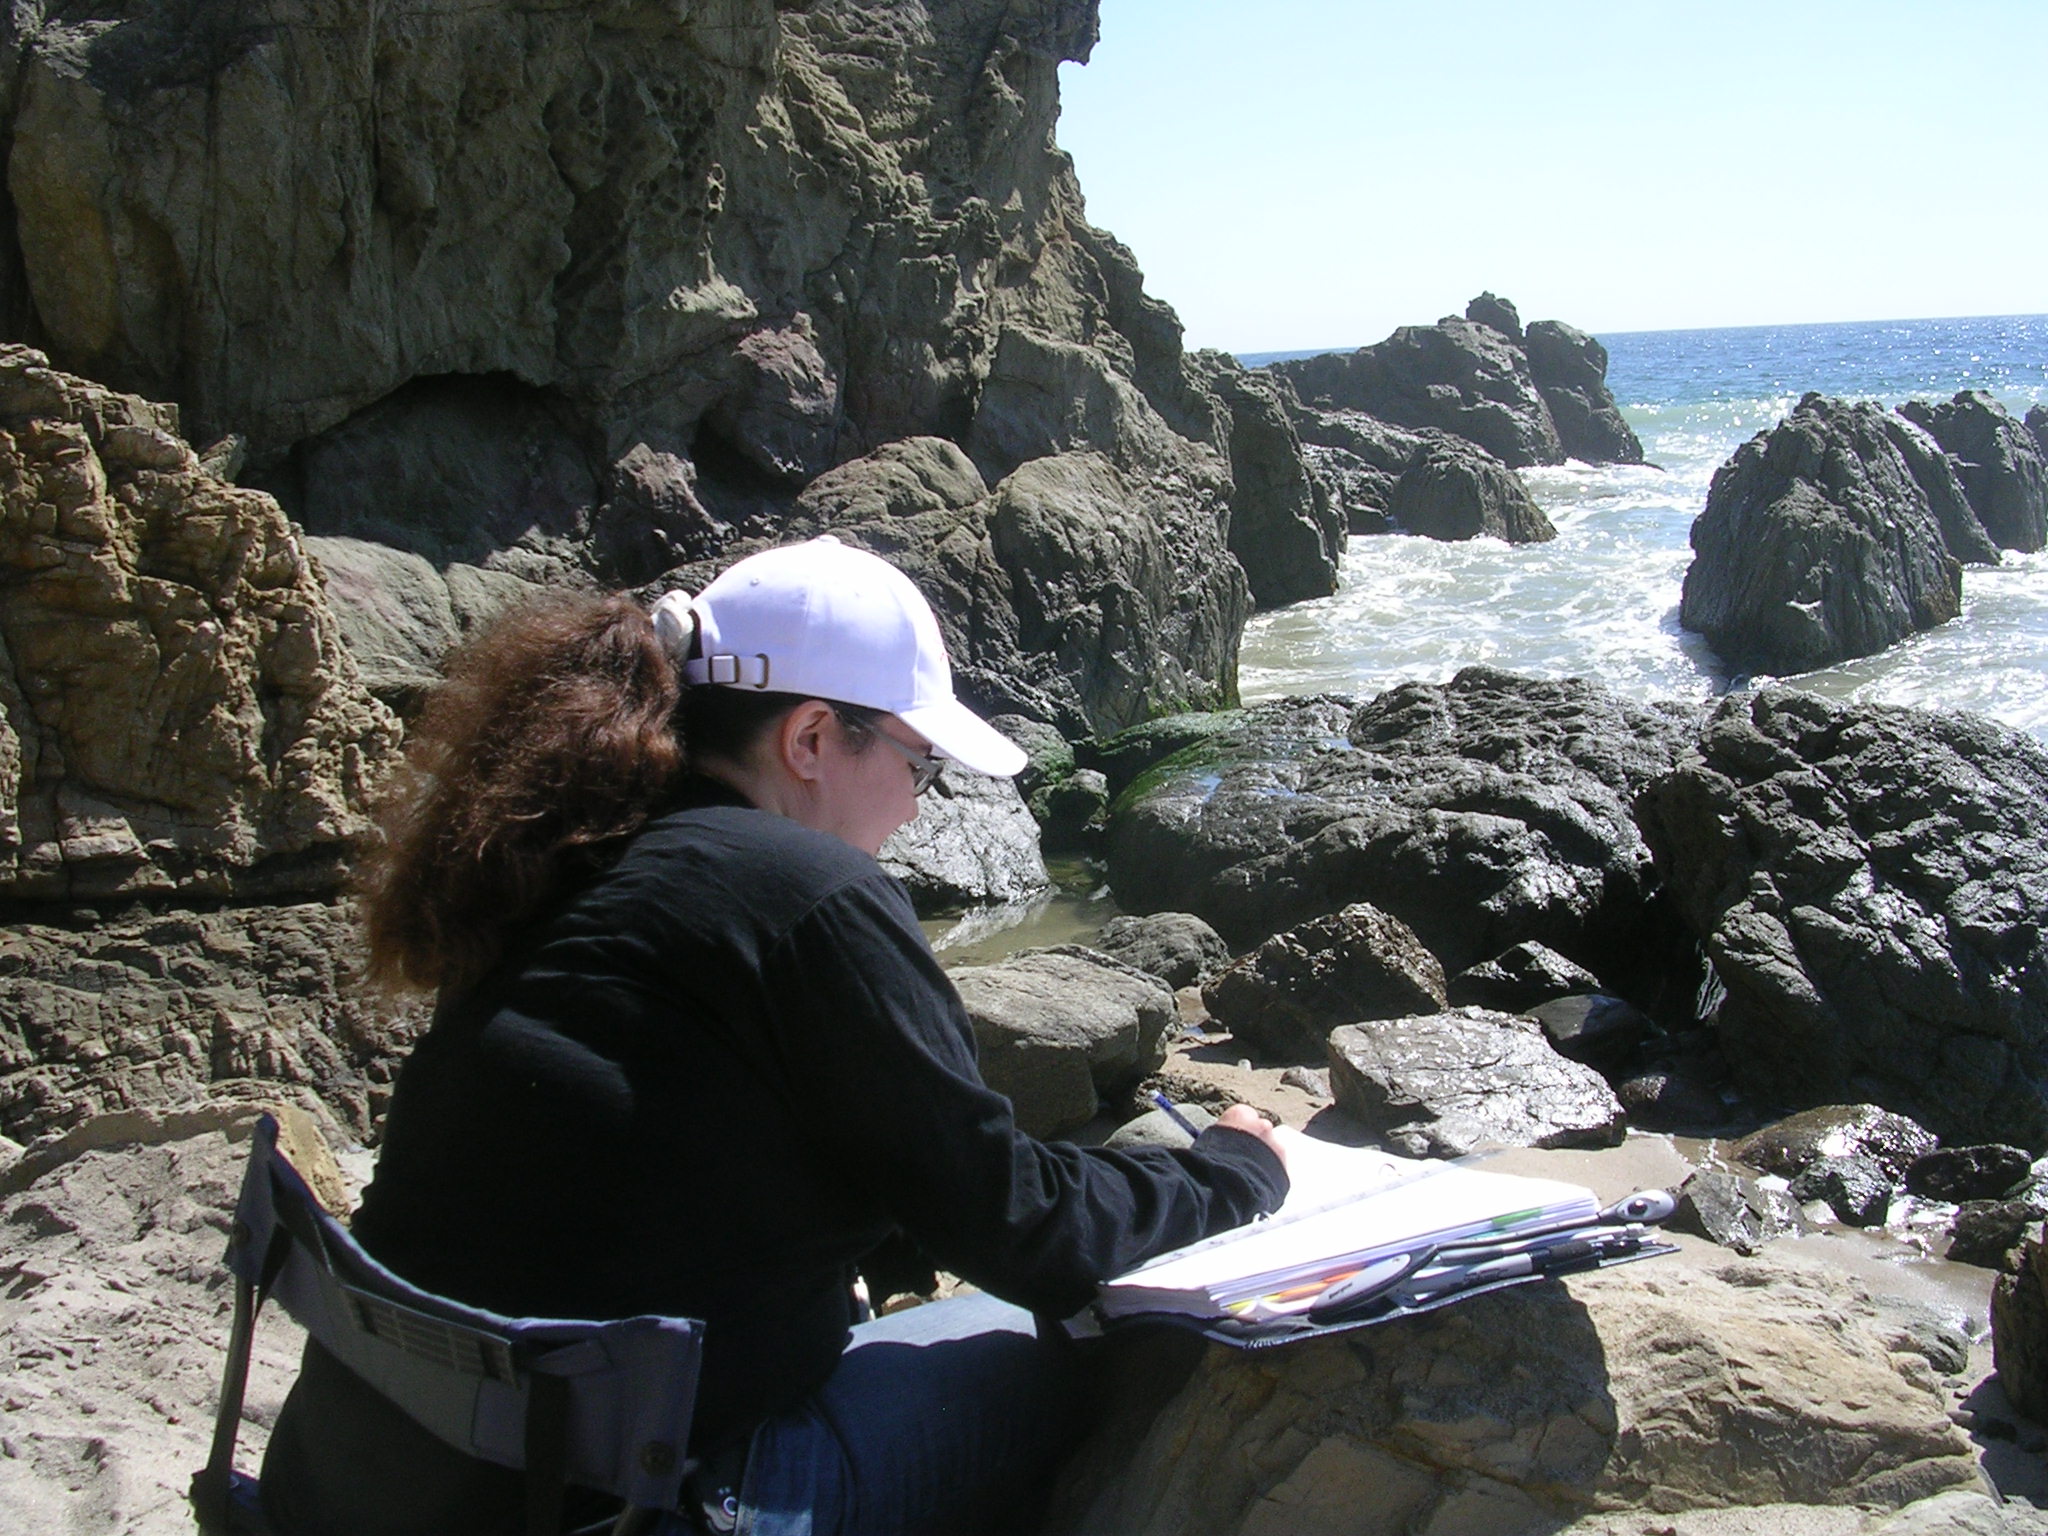 Script Supervising on the Malibu beach, while shooting season 2 of 